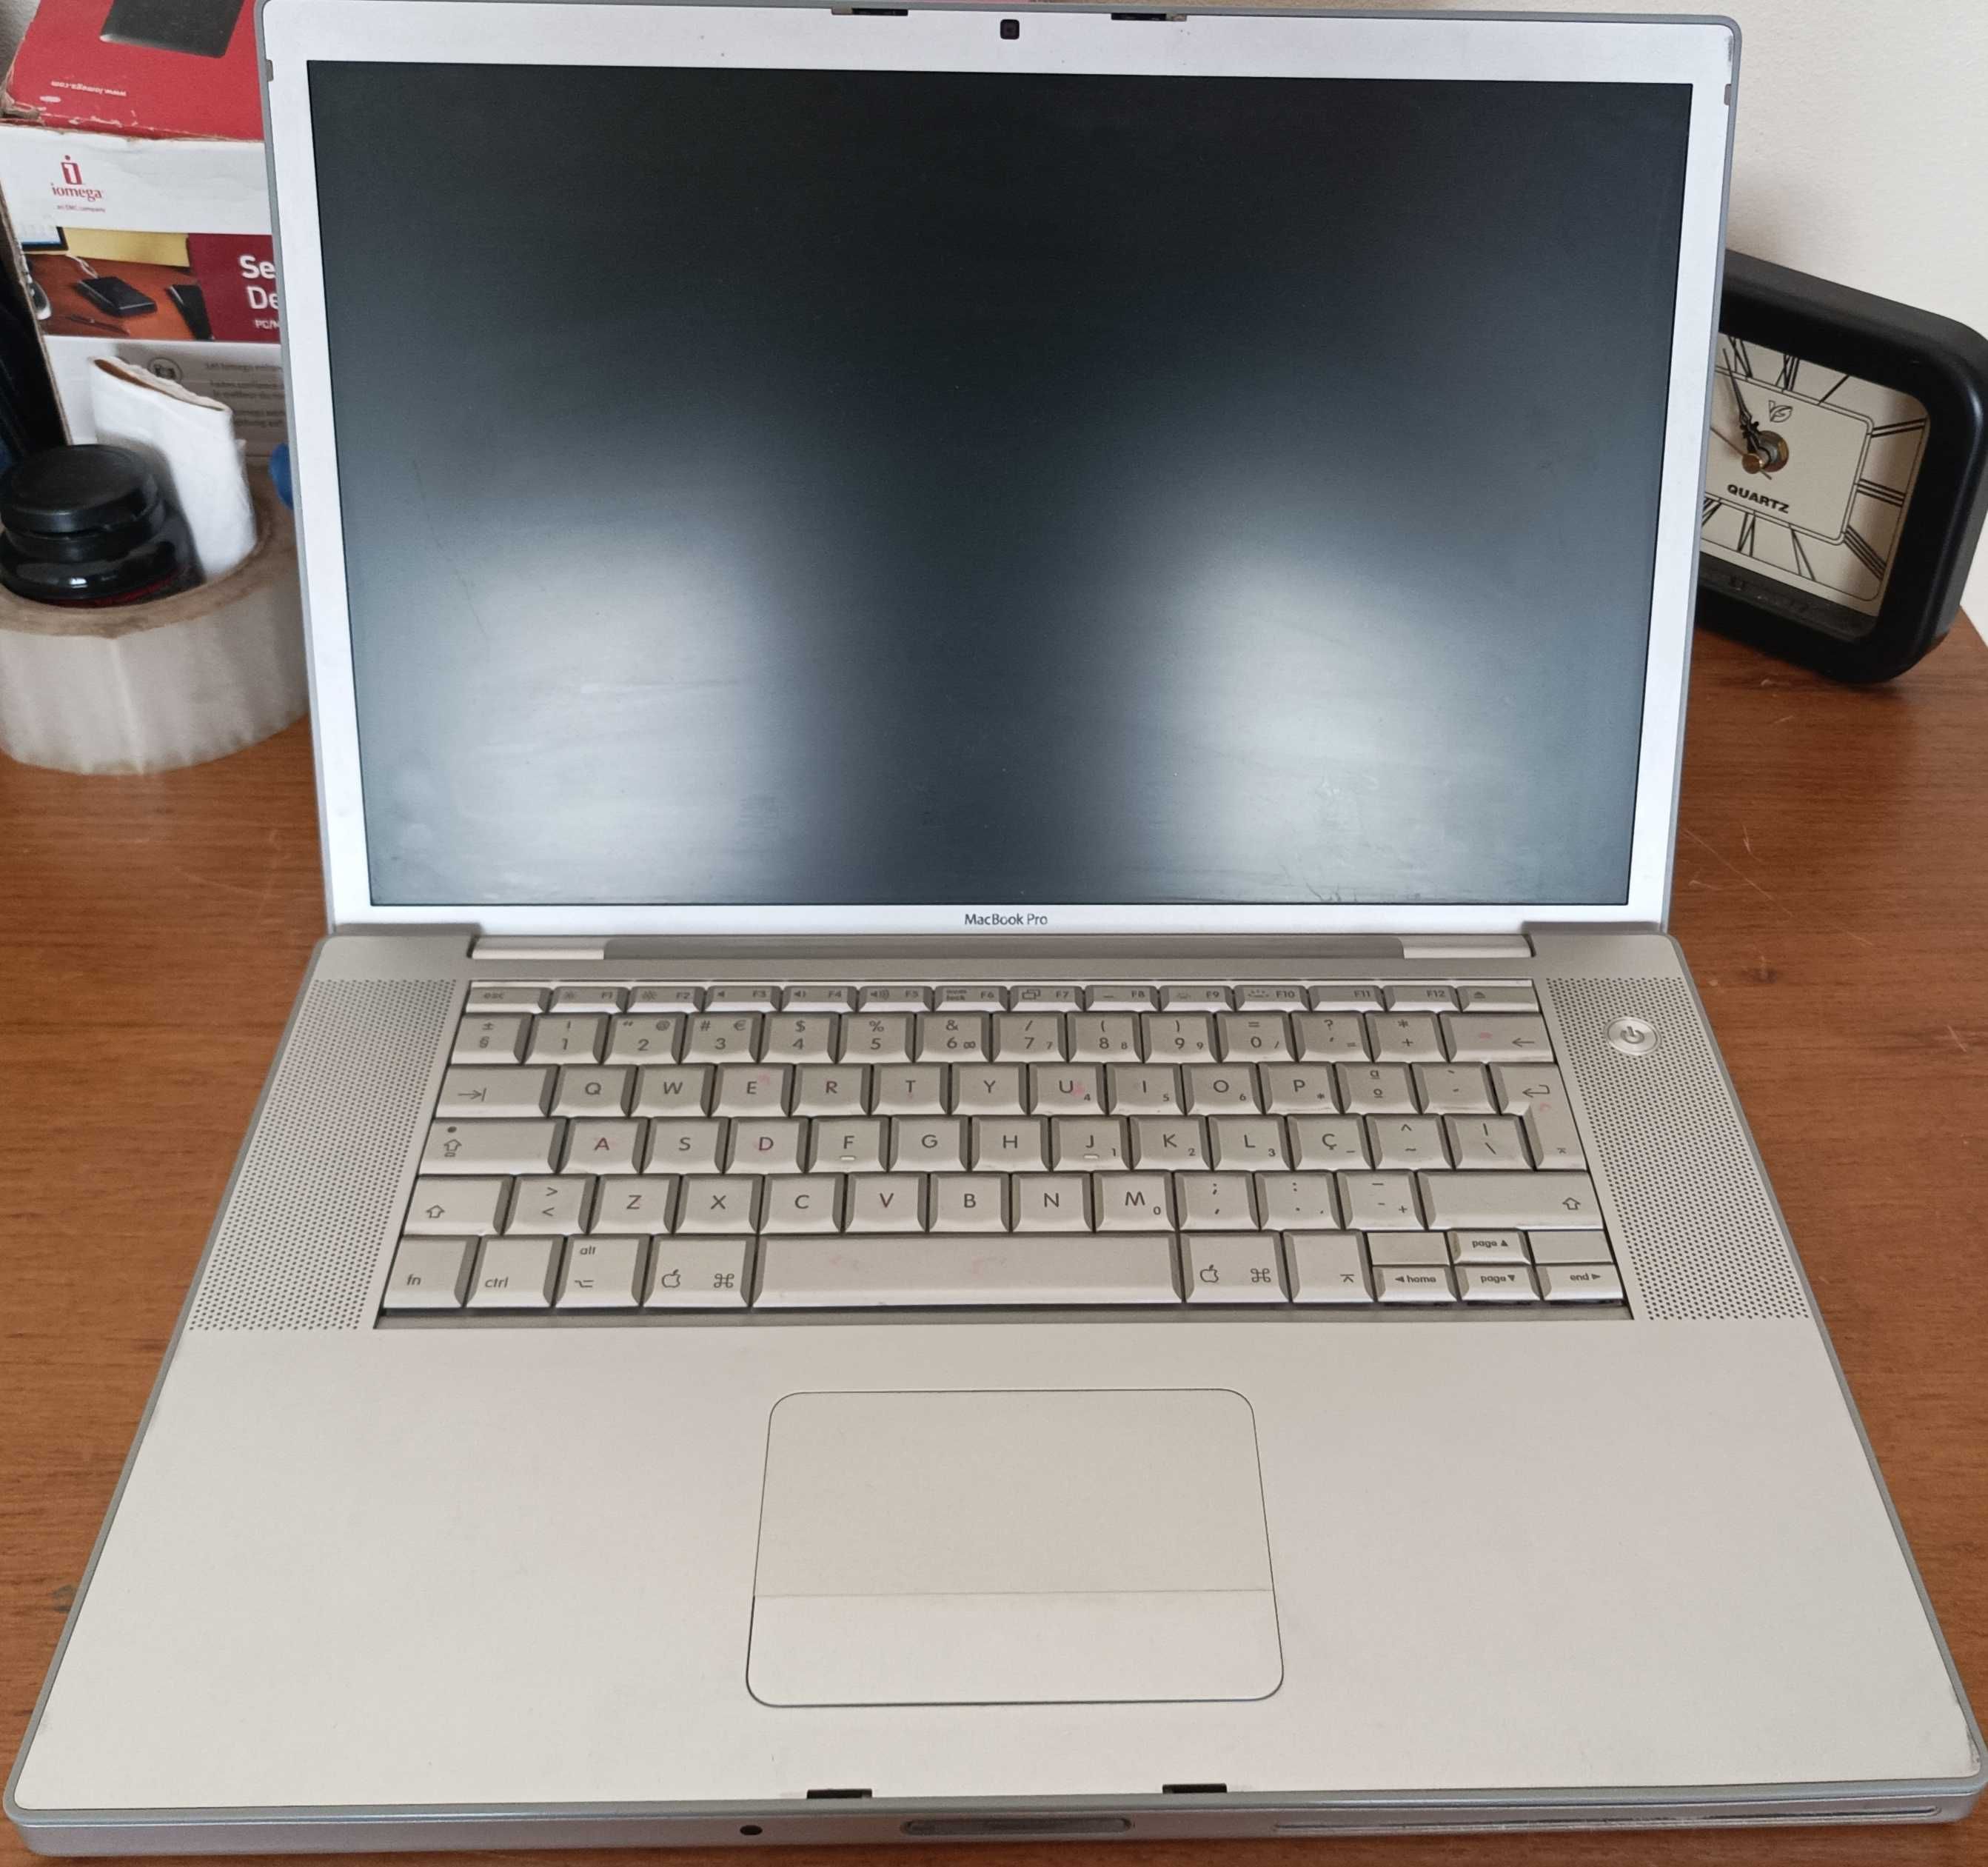 MacBook Pro modelo A1211